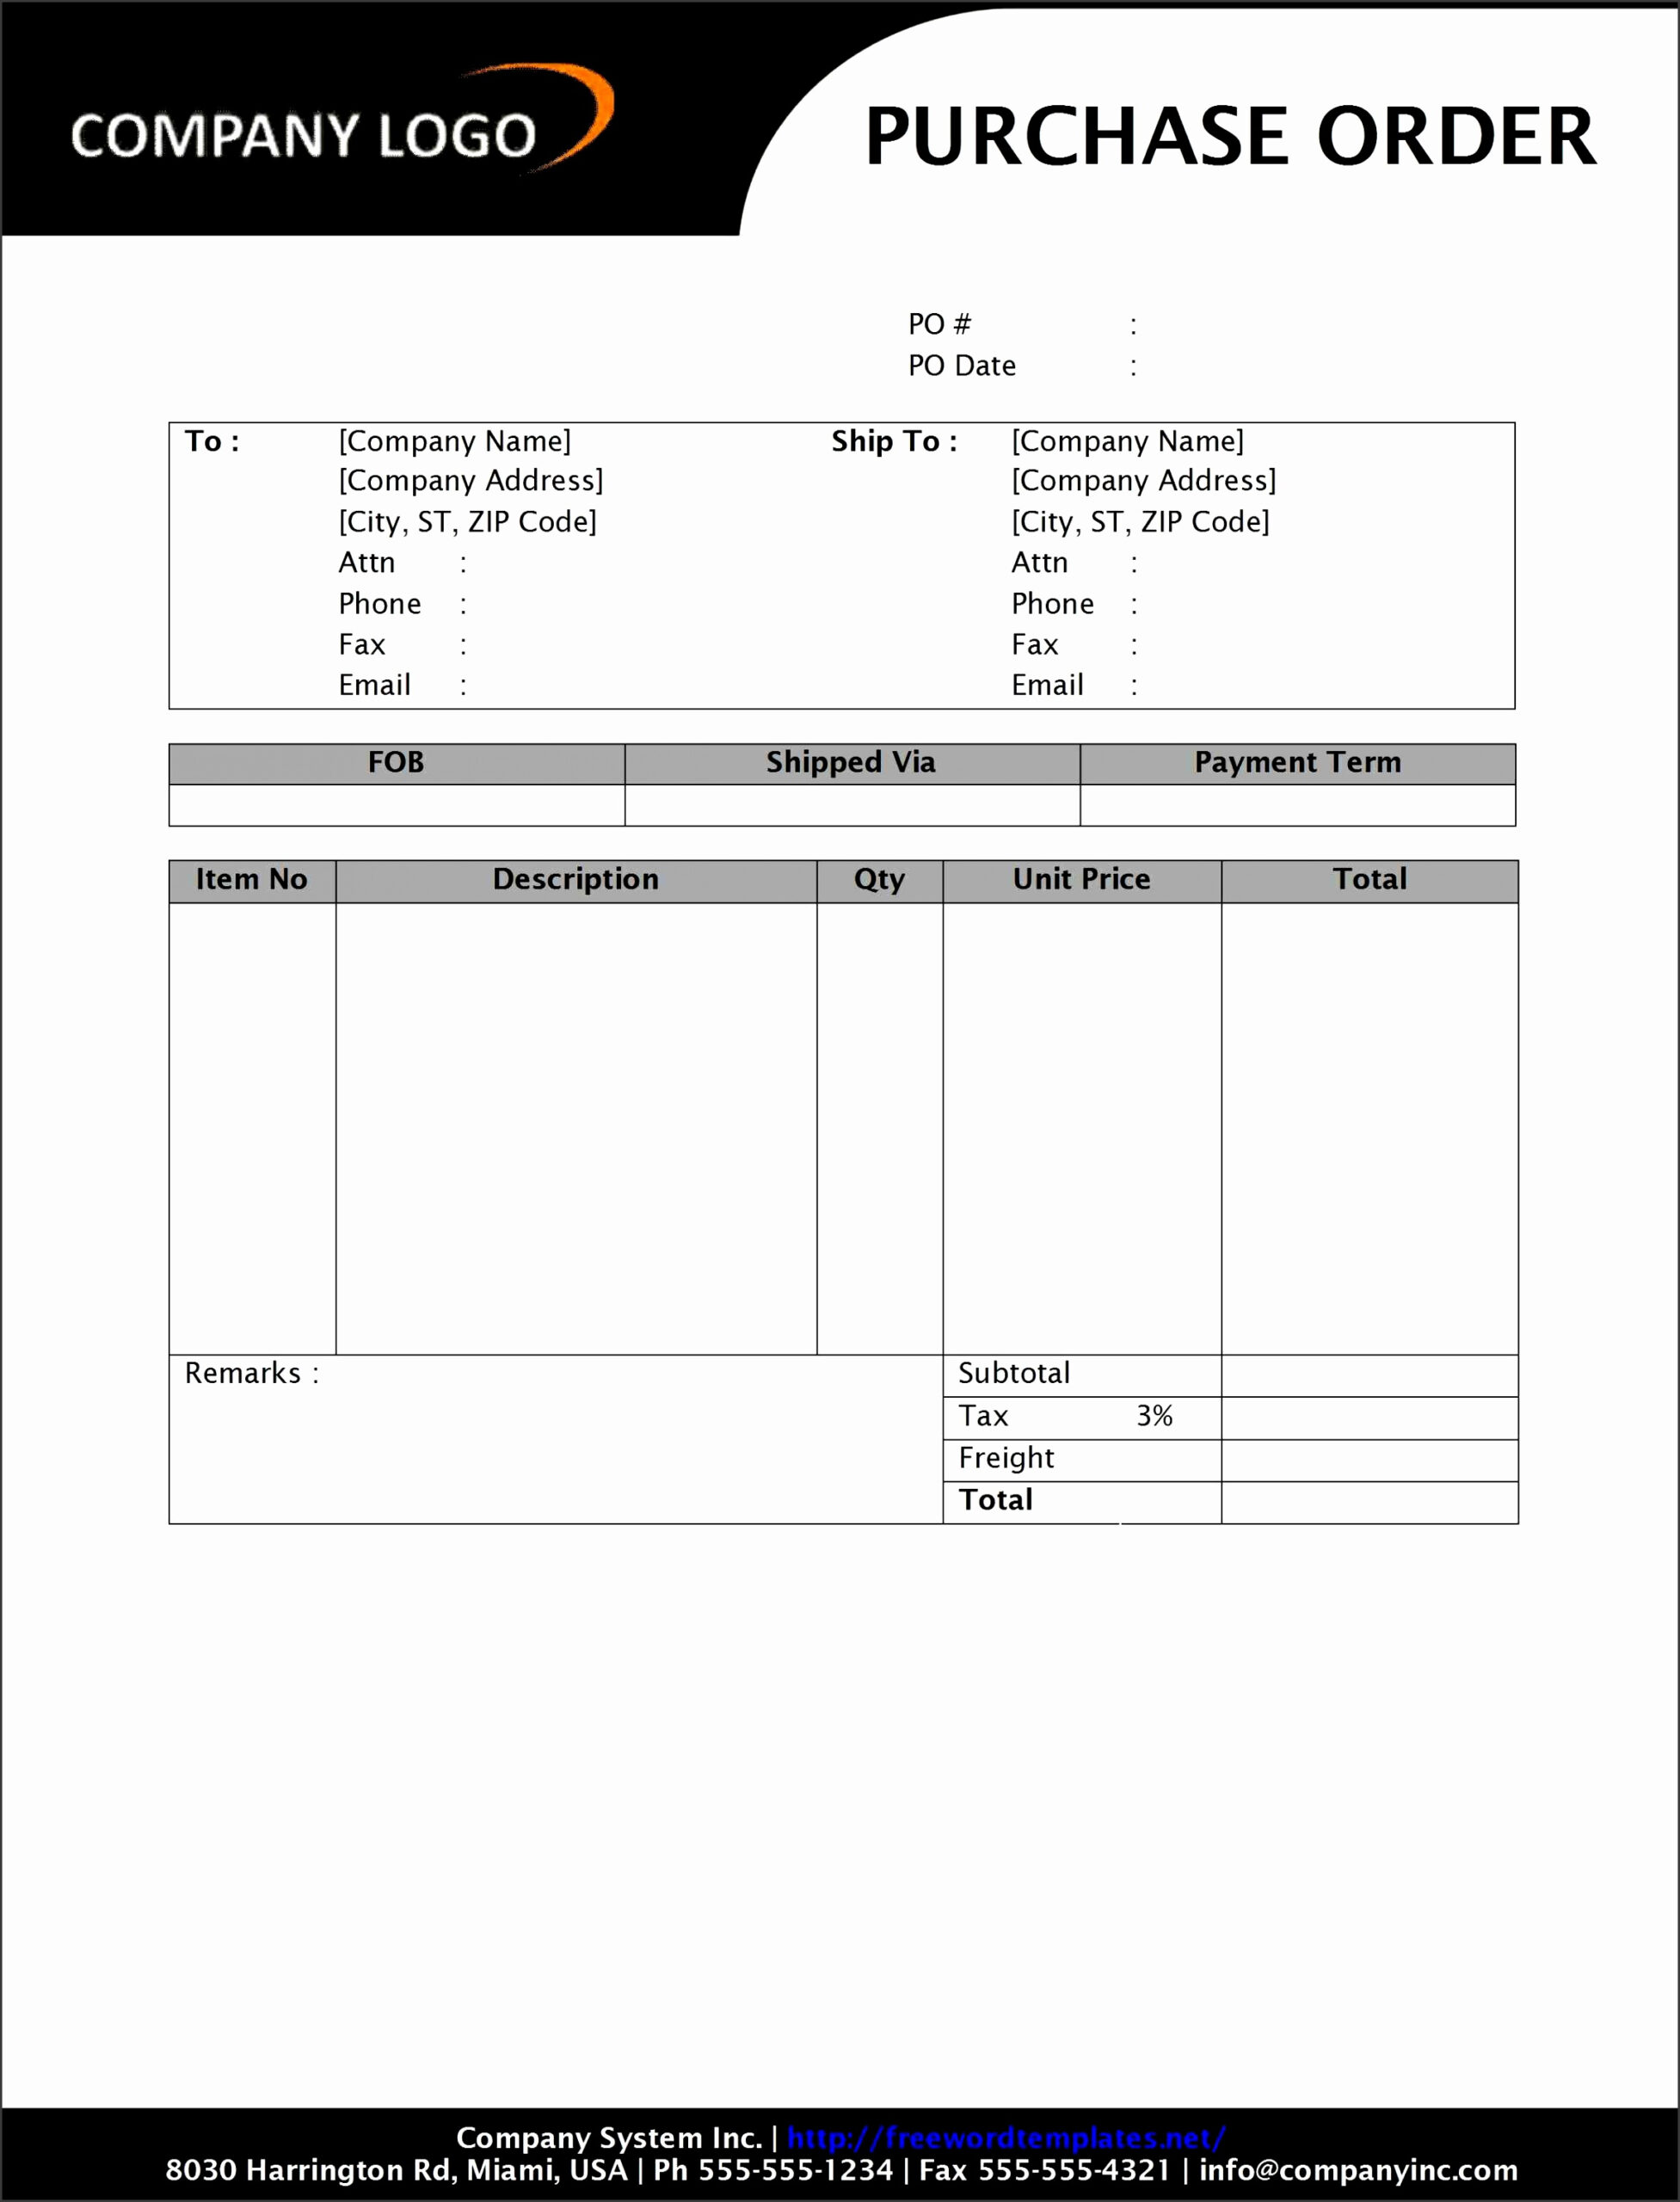 7 Purchase Order Forms SampleTemplatess SampleTemplatess